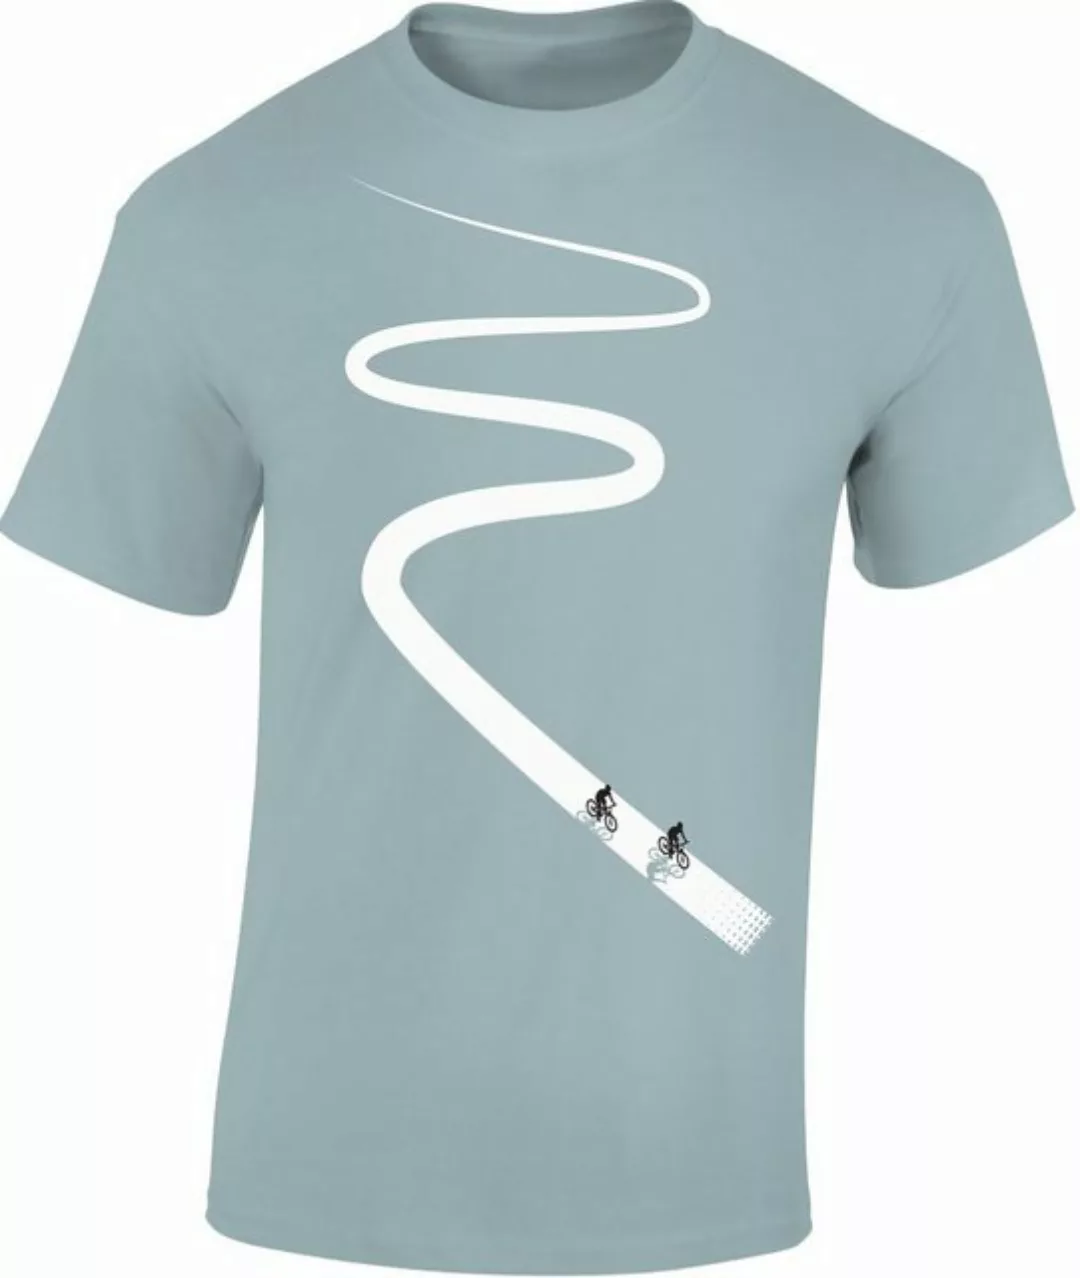 Baddery Print-Shirt Fahrrad T-Shirt : "Radweg" - Fun Shirts Männer, hochwer günstig online kaufen